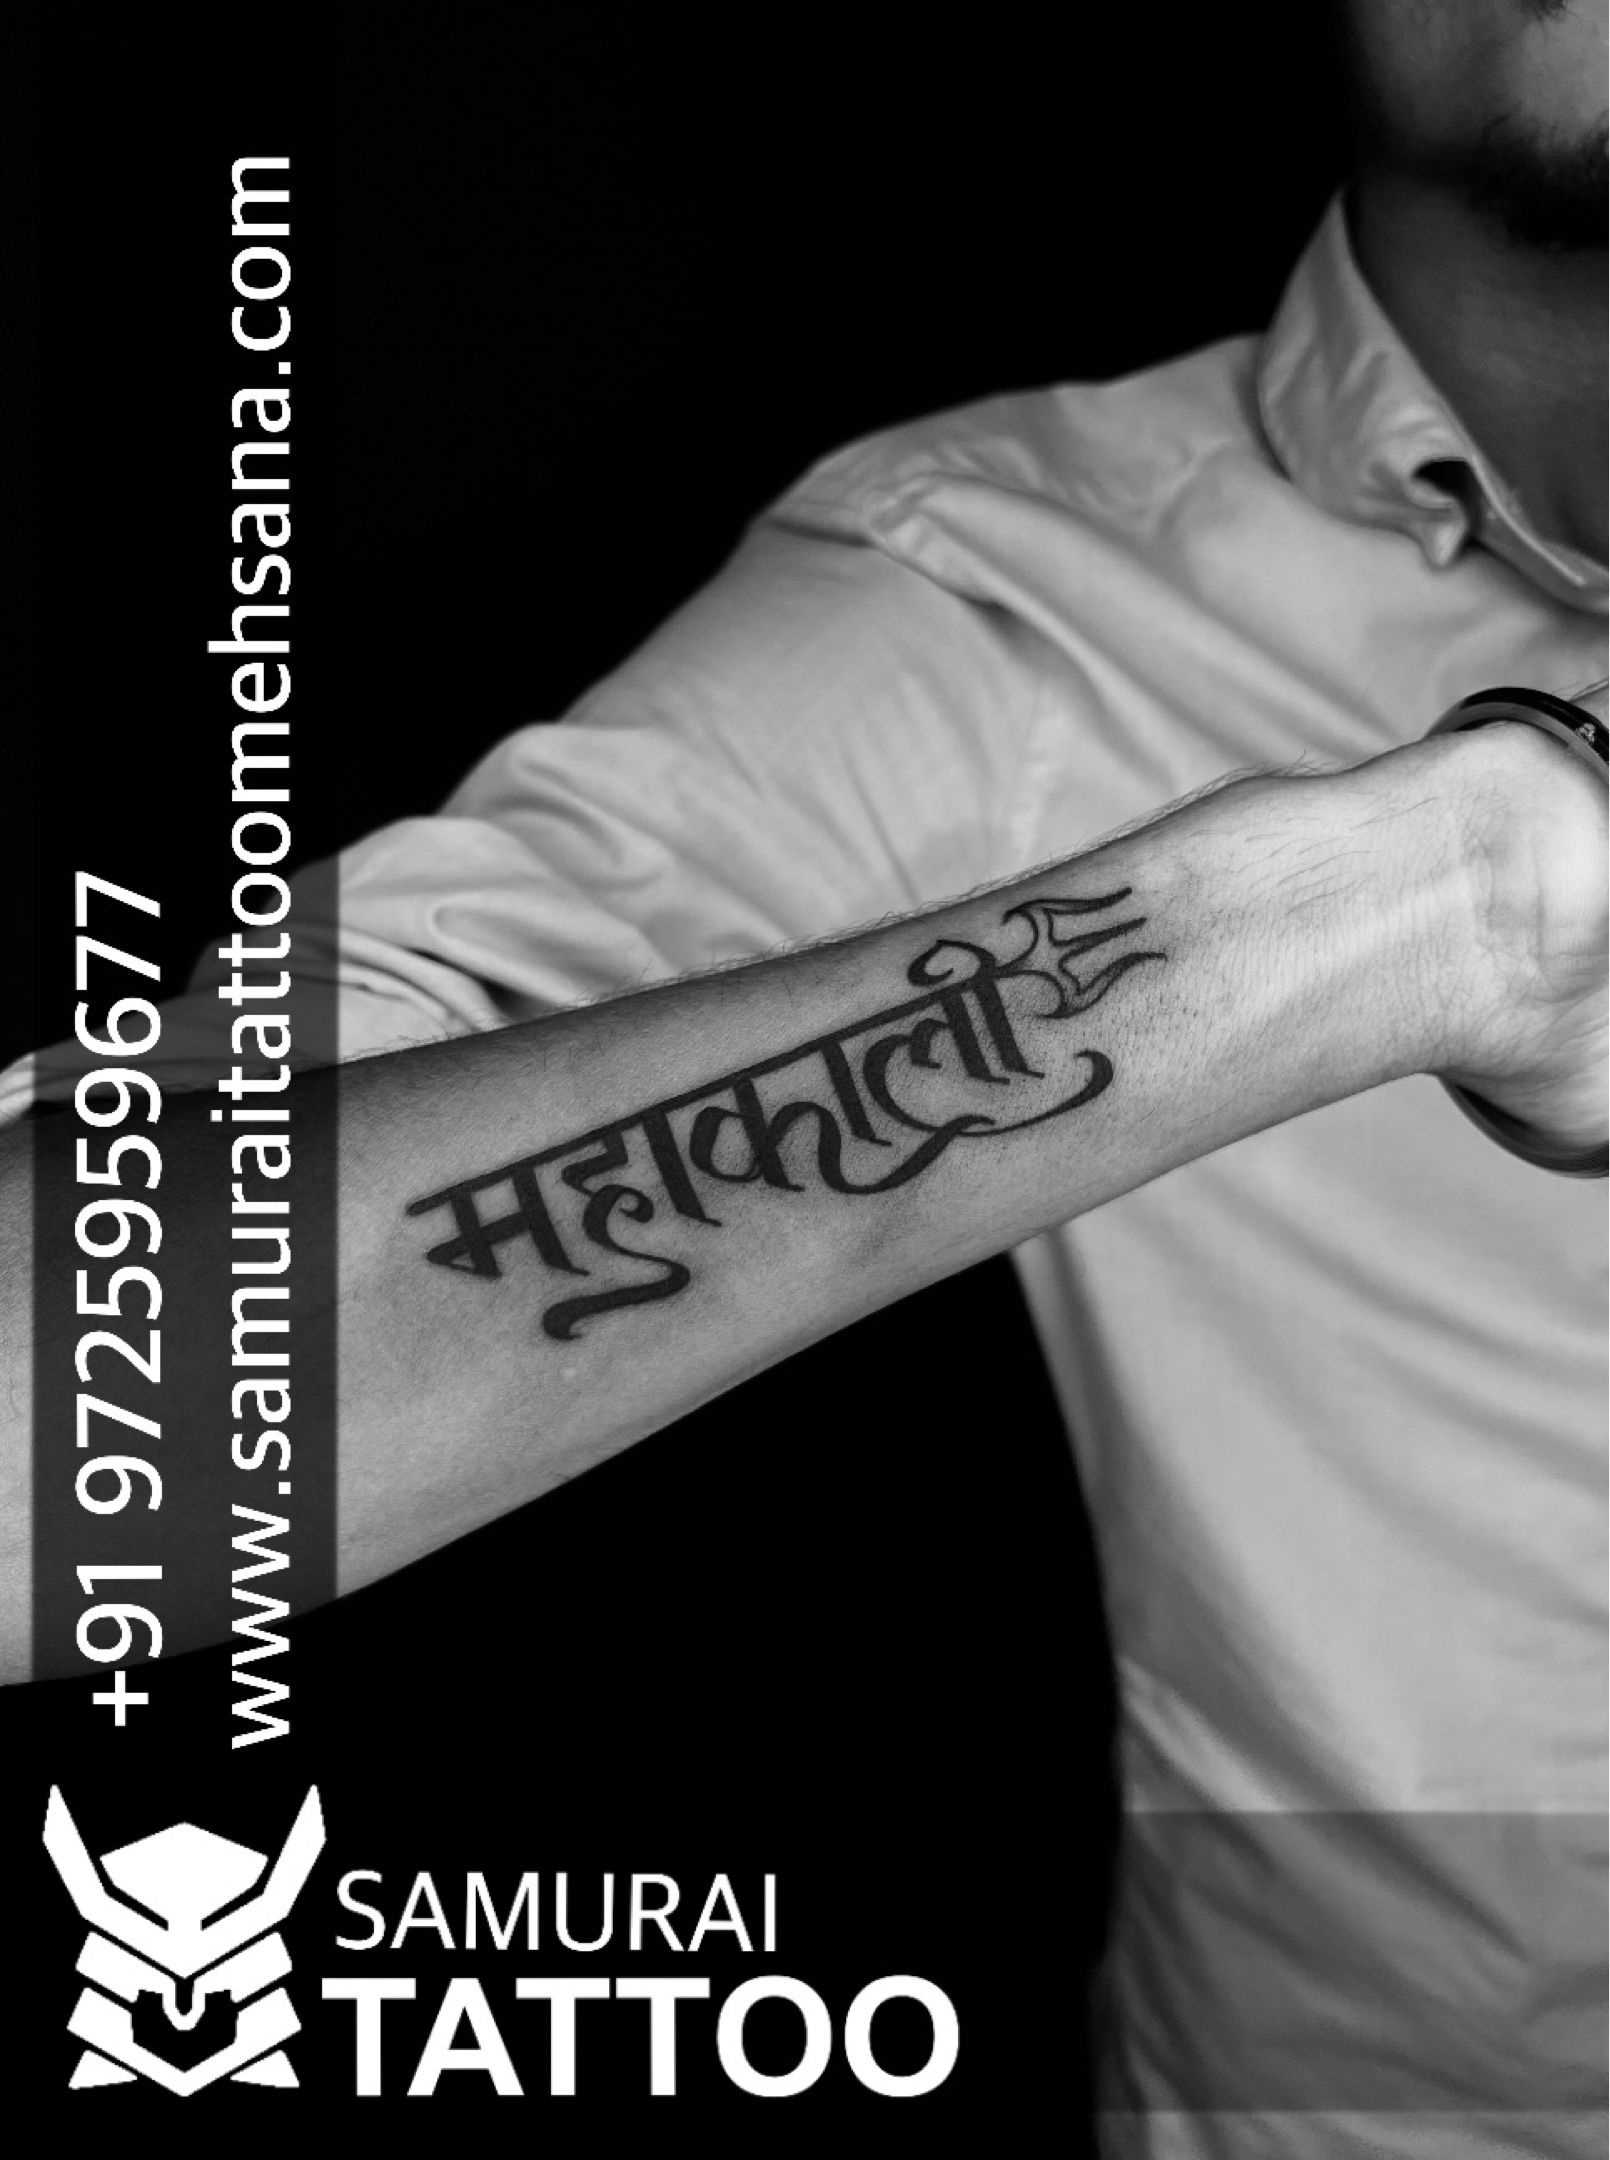 10 Am To 8 Pm Everyday Unisex Permanent Tattoo Guddu Tattoos  ID  23468445988